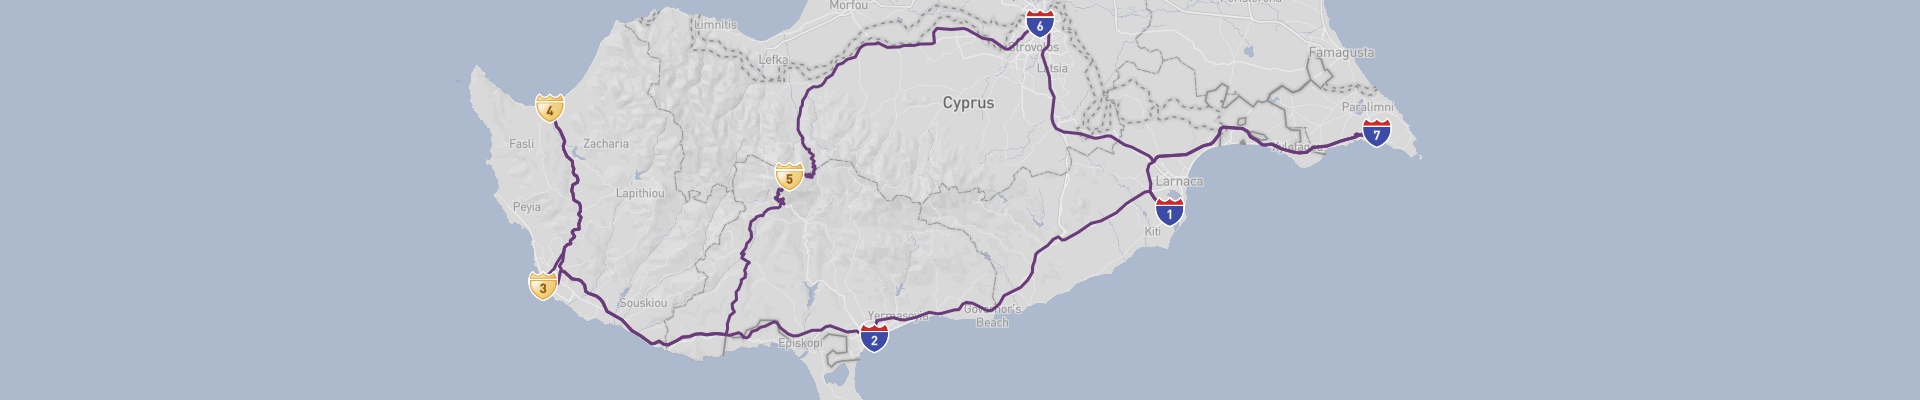 Cyprus Road Trip